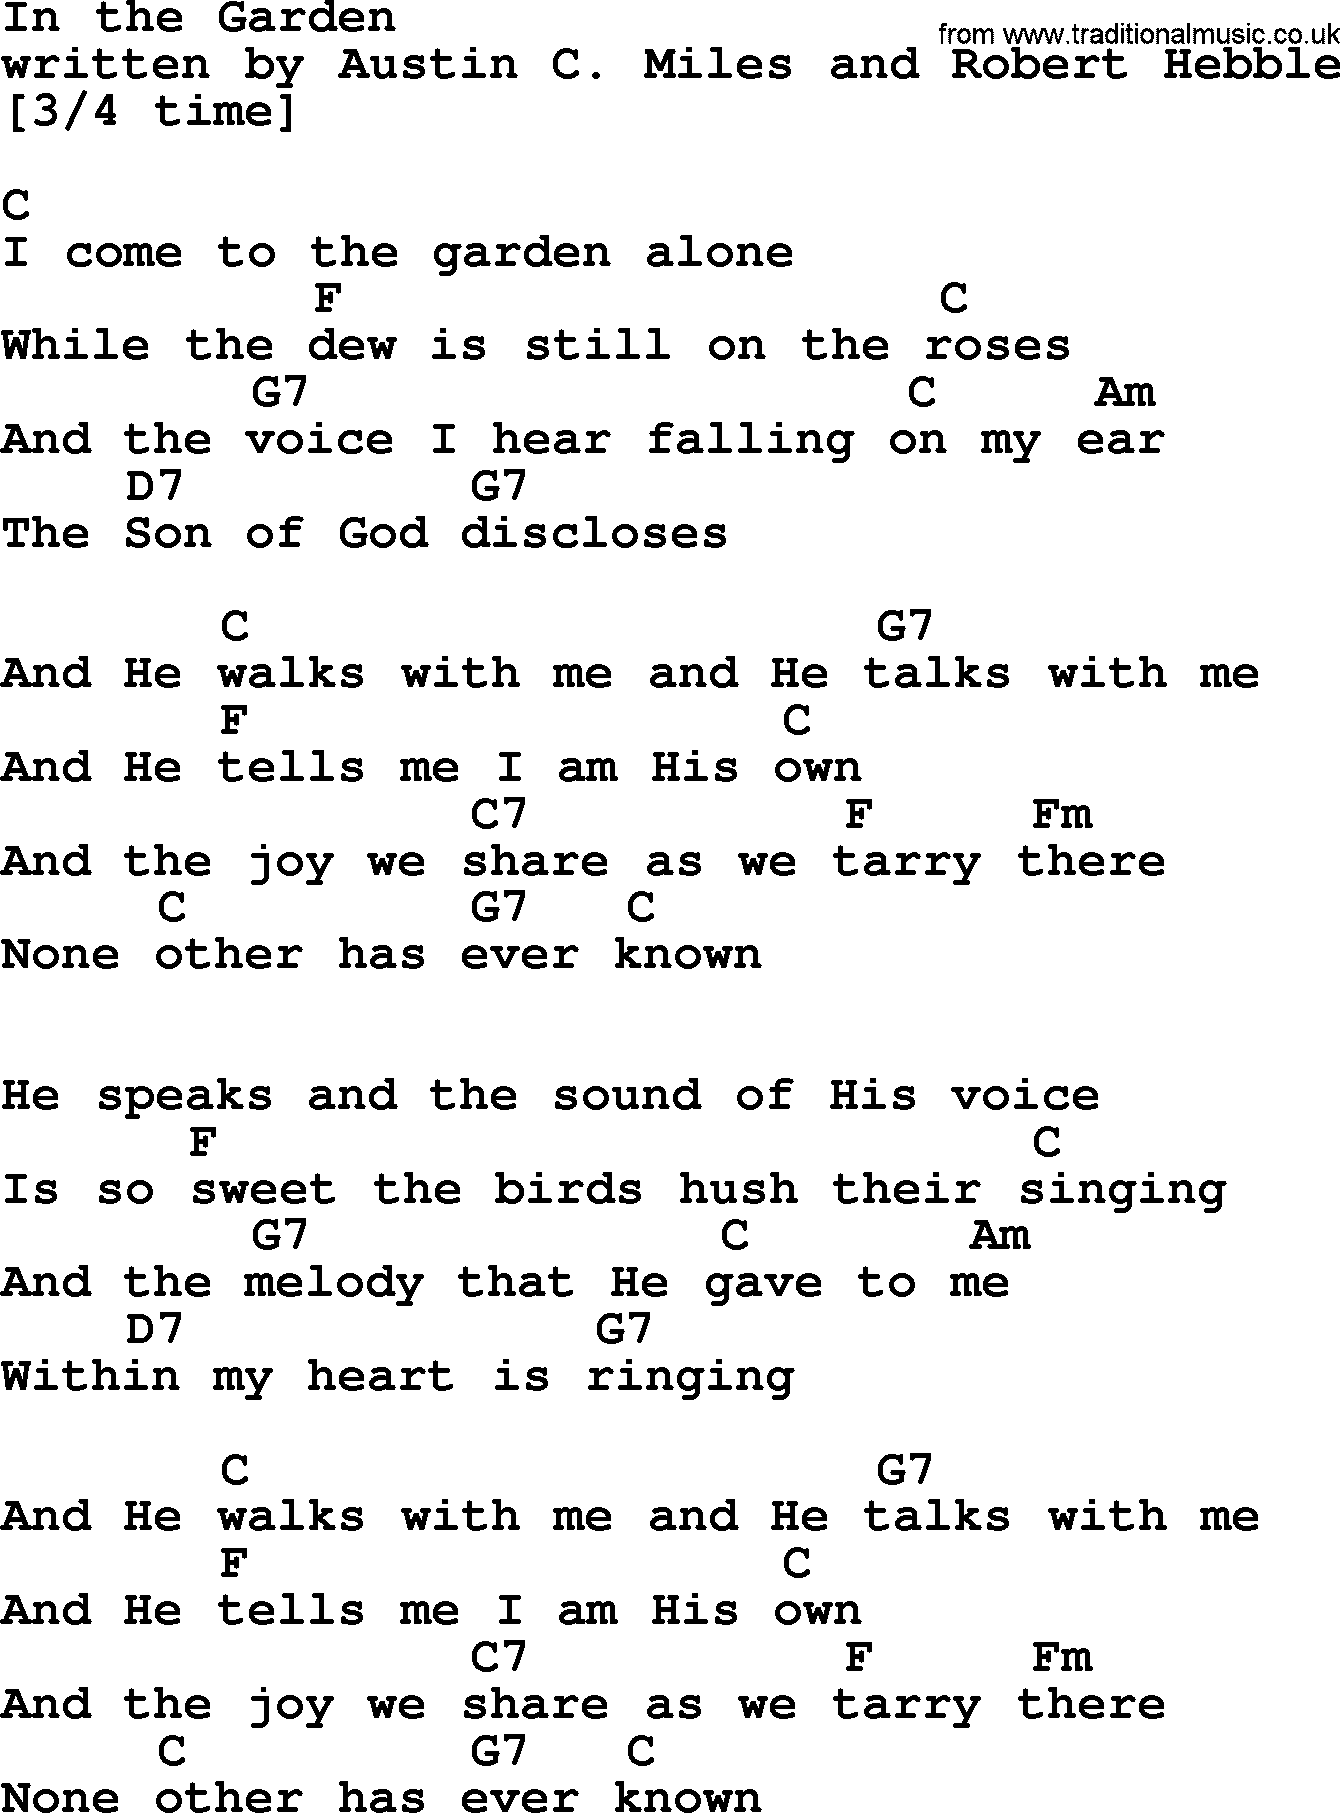 Loretta Lynn song: In The Garden lyrics and chords